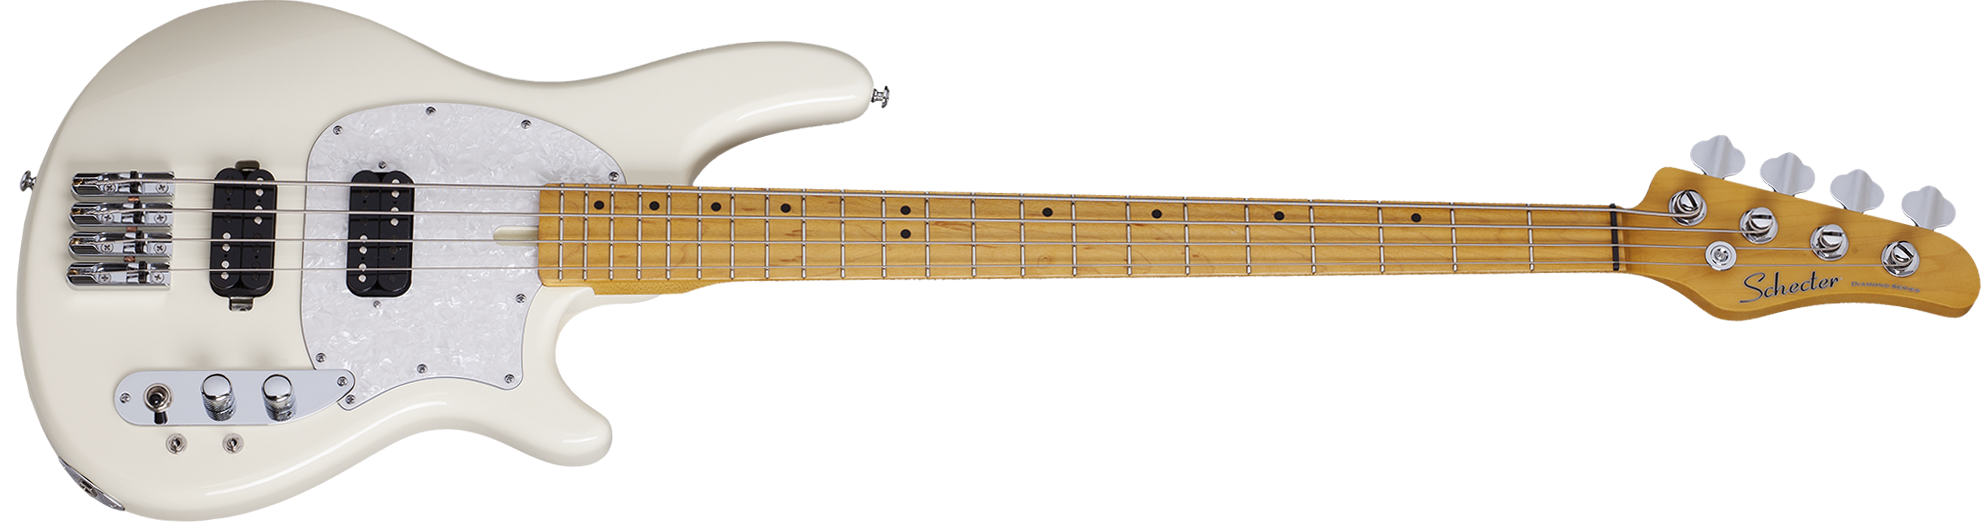 Schecter CV-4 Bass Guitar on a white background